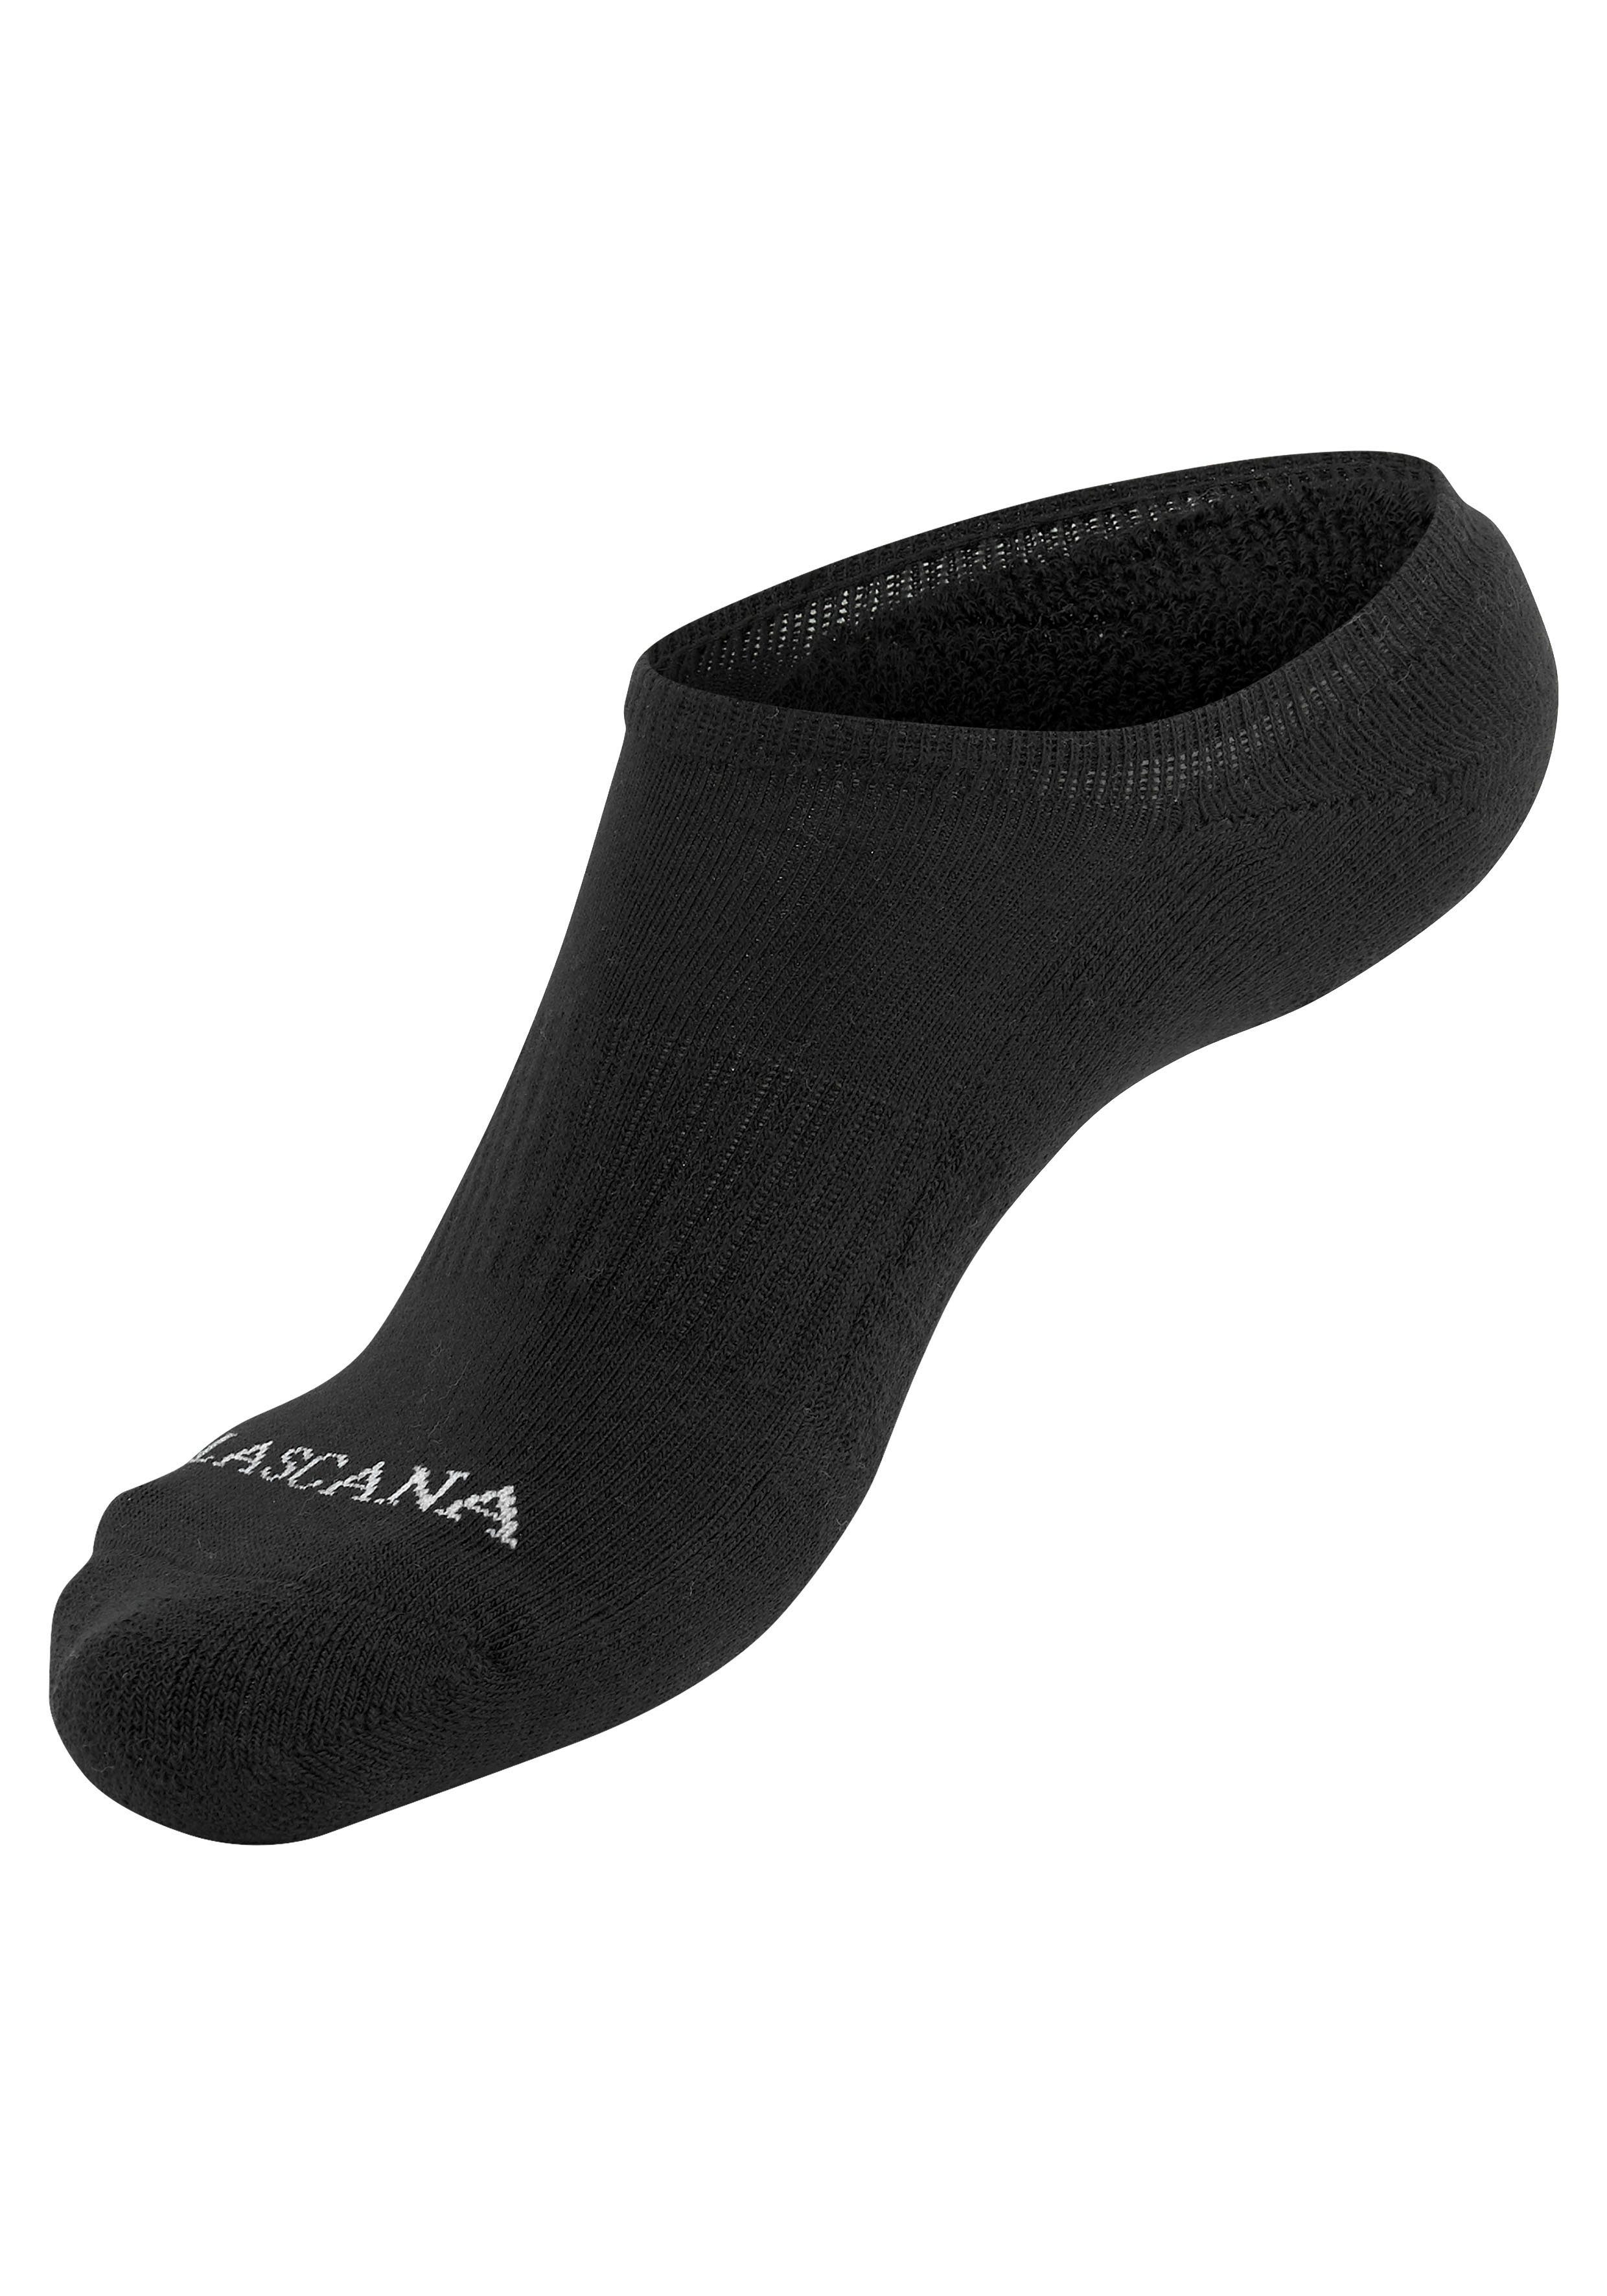 LASCANA ACTIVE Sneakersocken weiß, mit Fußfrottee 7-Paar) grau-meliert schwarz, 2x 2x (Set, 3x